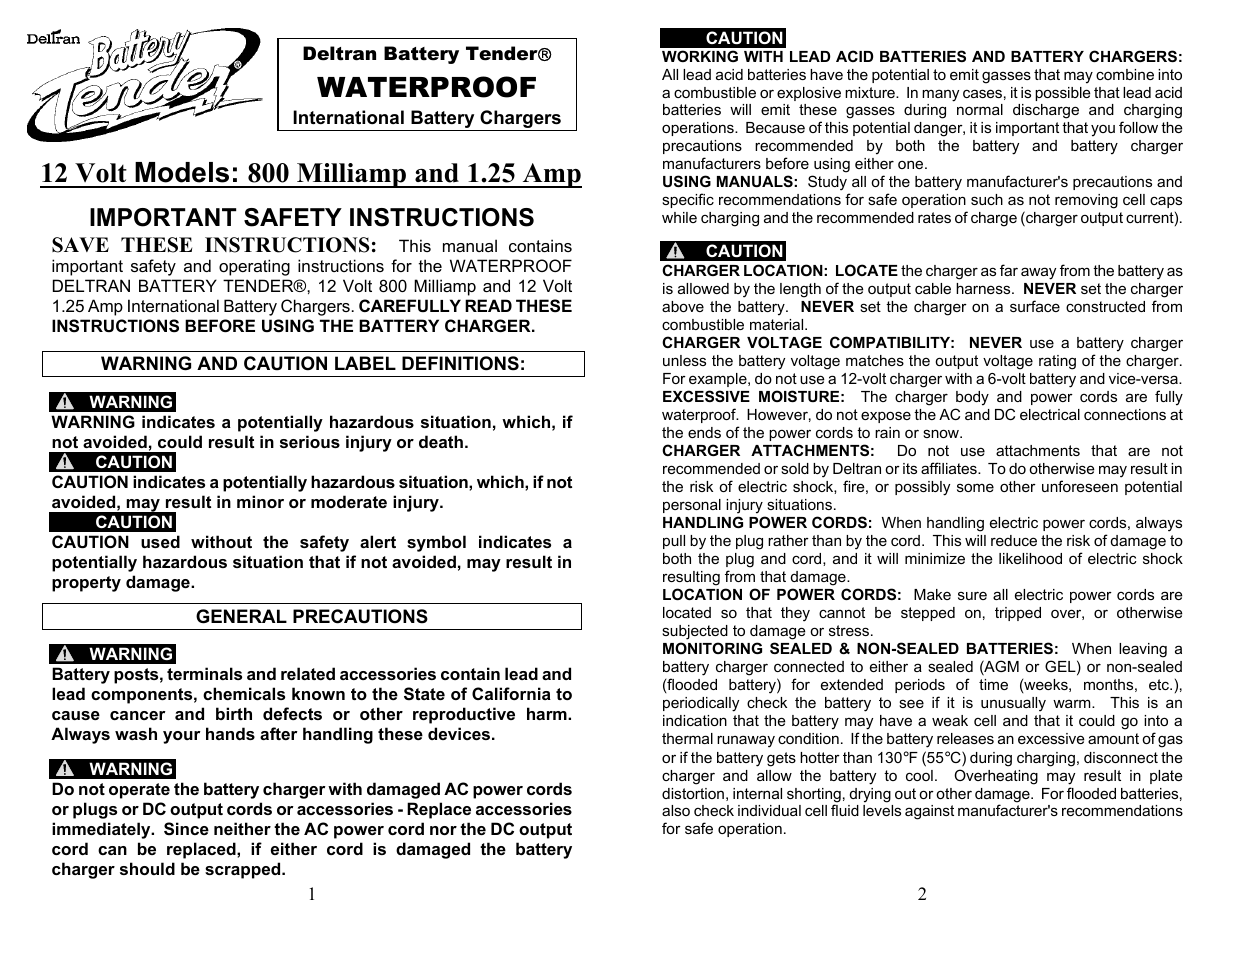 Waterproof 800 International - 12V @ 800 mA - USA & Western Hemisphere (PN 022-0150-DL-WH) User Instructions